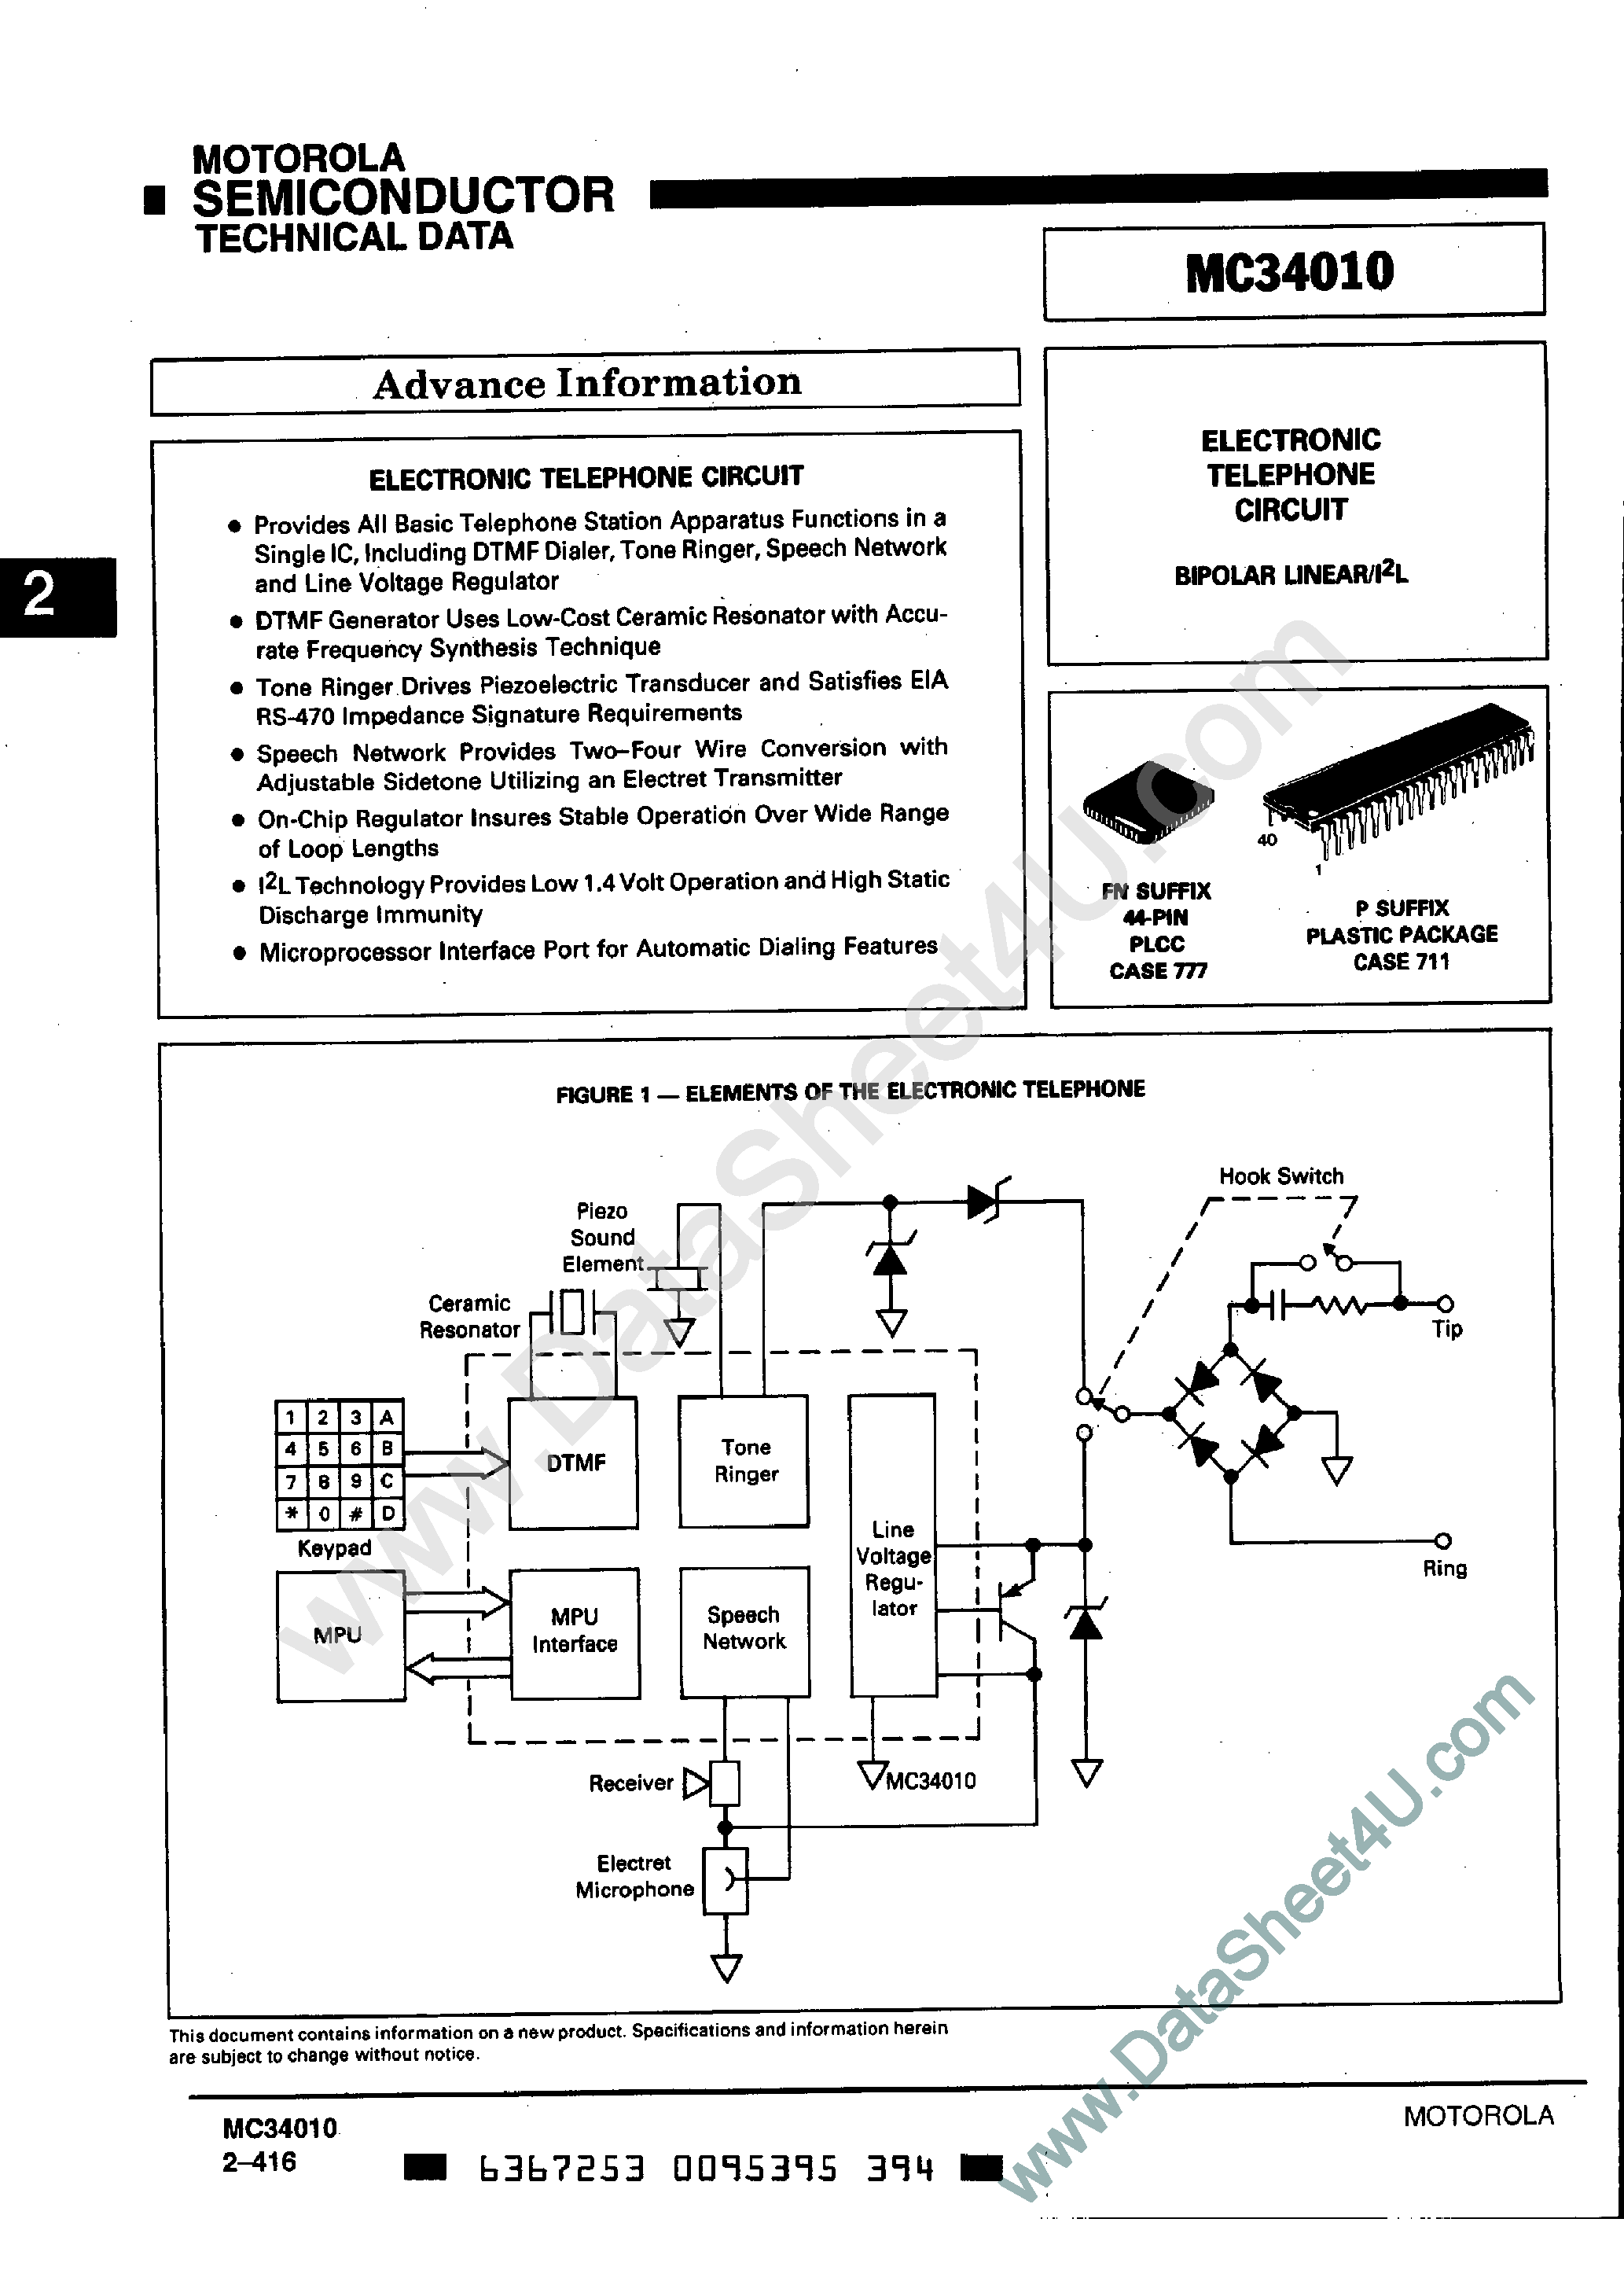 Datasheet MC34010 - ELECTRONIC TELEPHONE CIRCUIT page 1